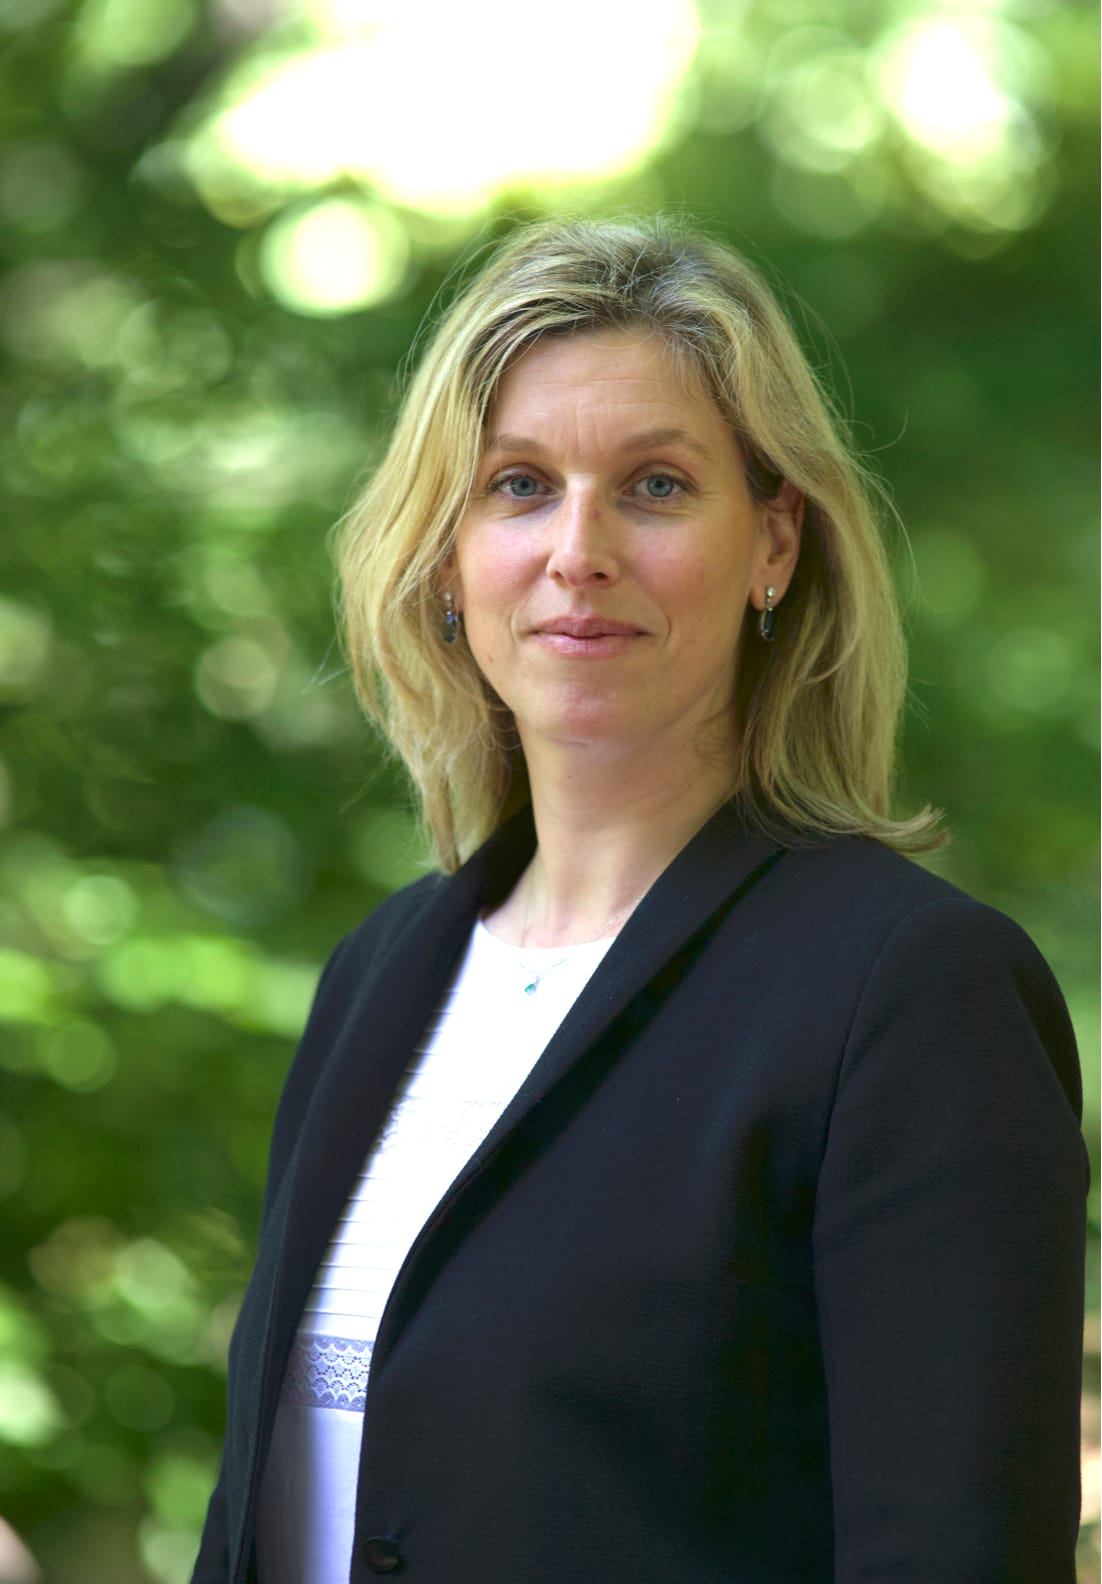 Hélène Carvallo - international family affairs attorney.